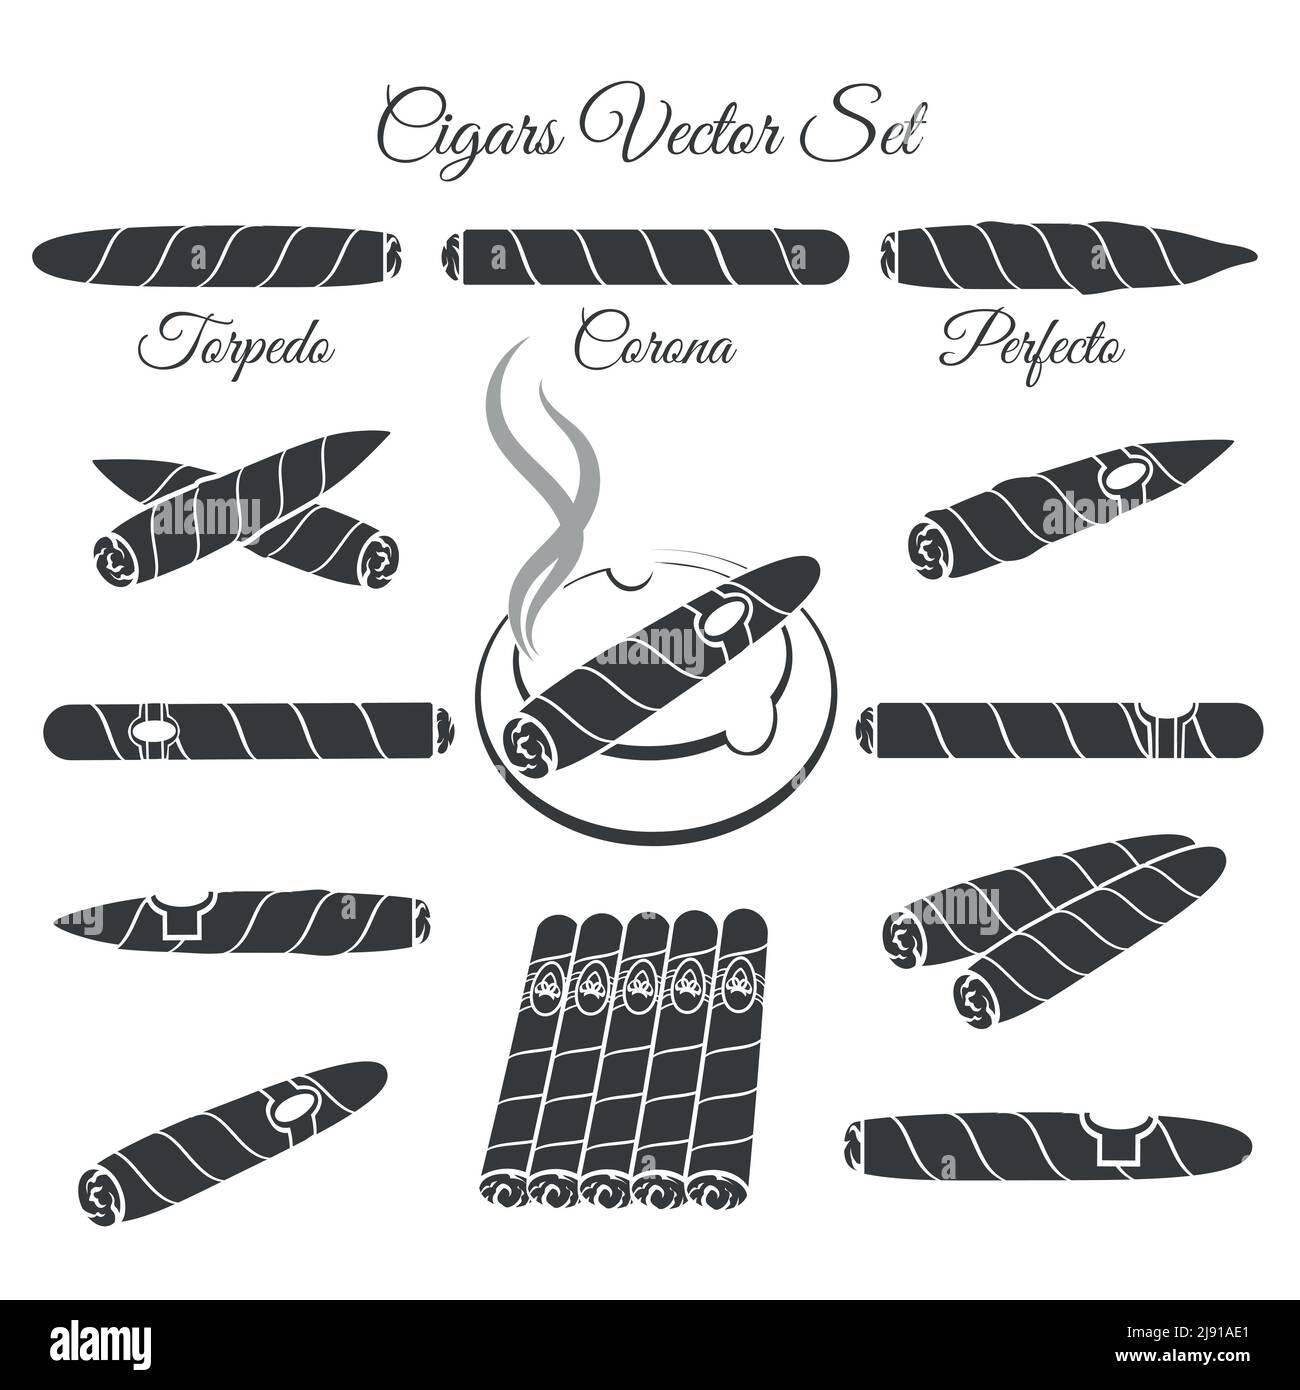 Handgezeichnete Zigarren Vektor. Torpedo corona und perfecto, Kultur Lifestyle Illustration. Vektor-Zigarren-Symbole Stock Vektor